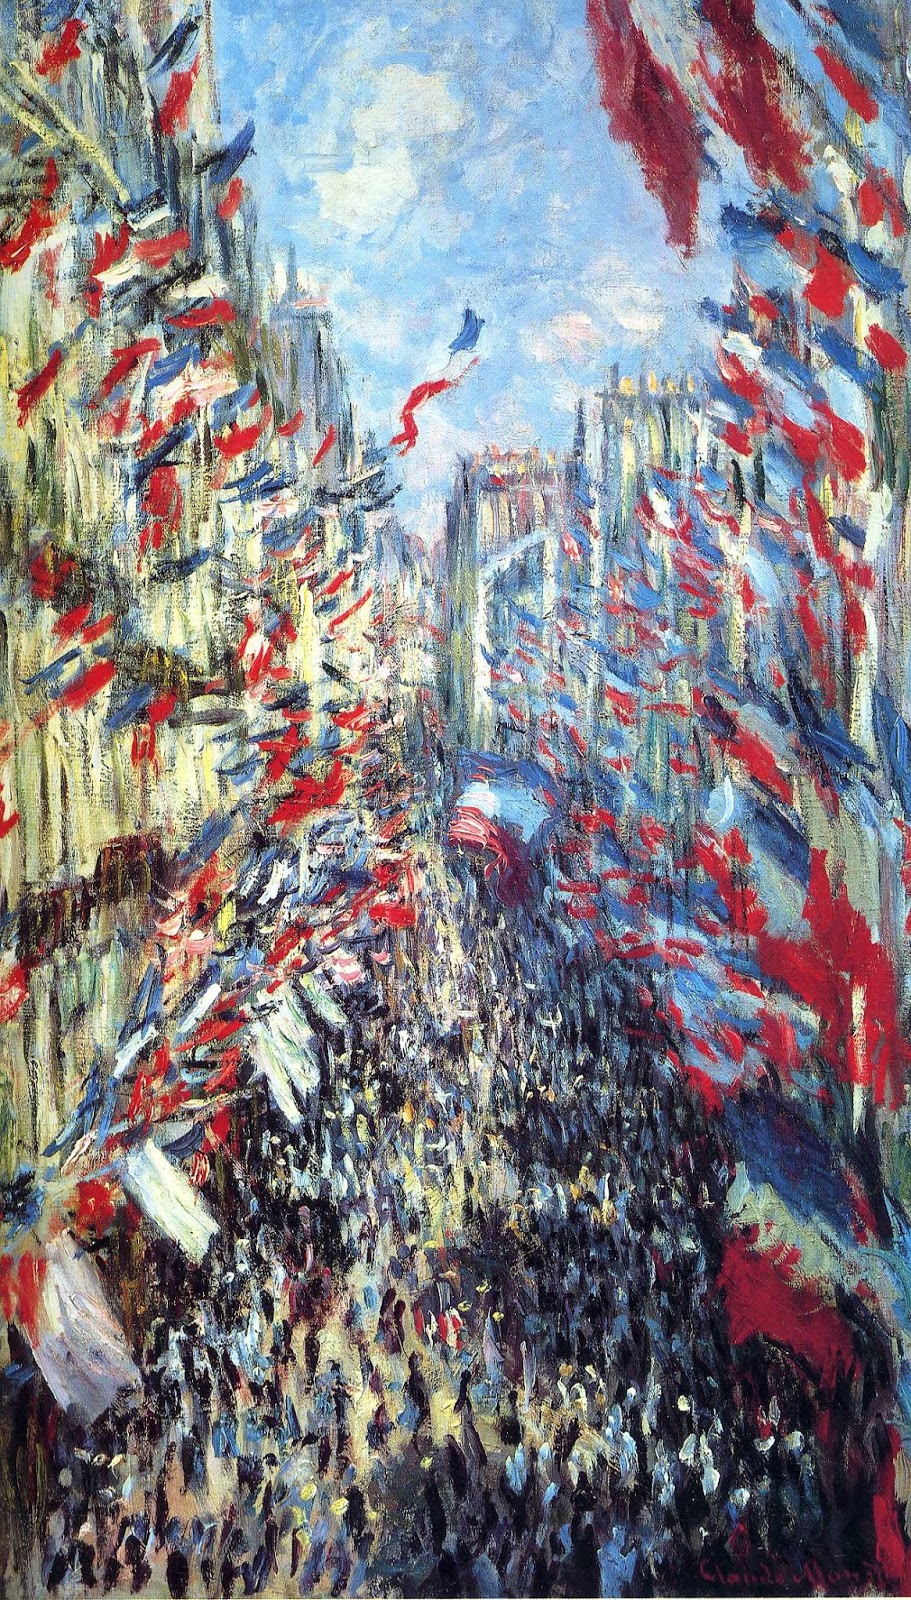 Claude+Monet-1840-1926 (810).jpg